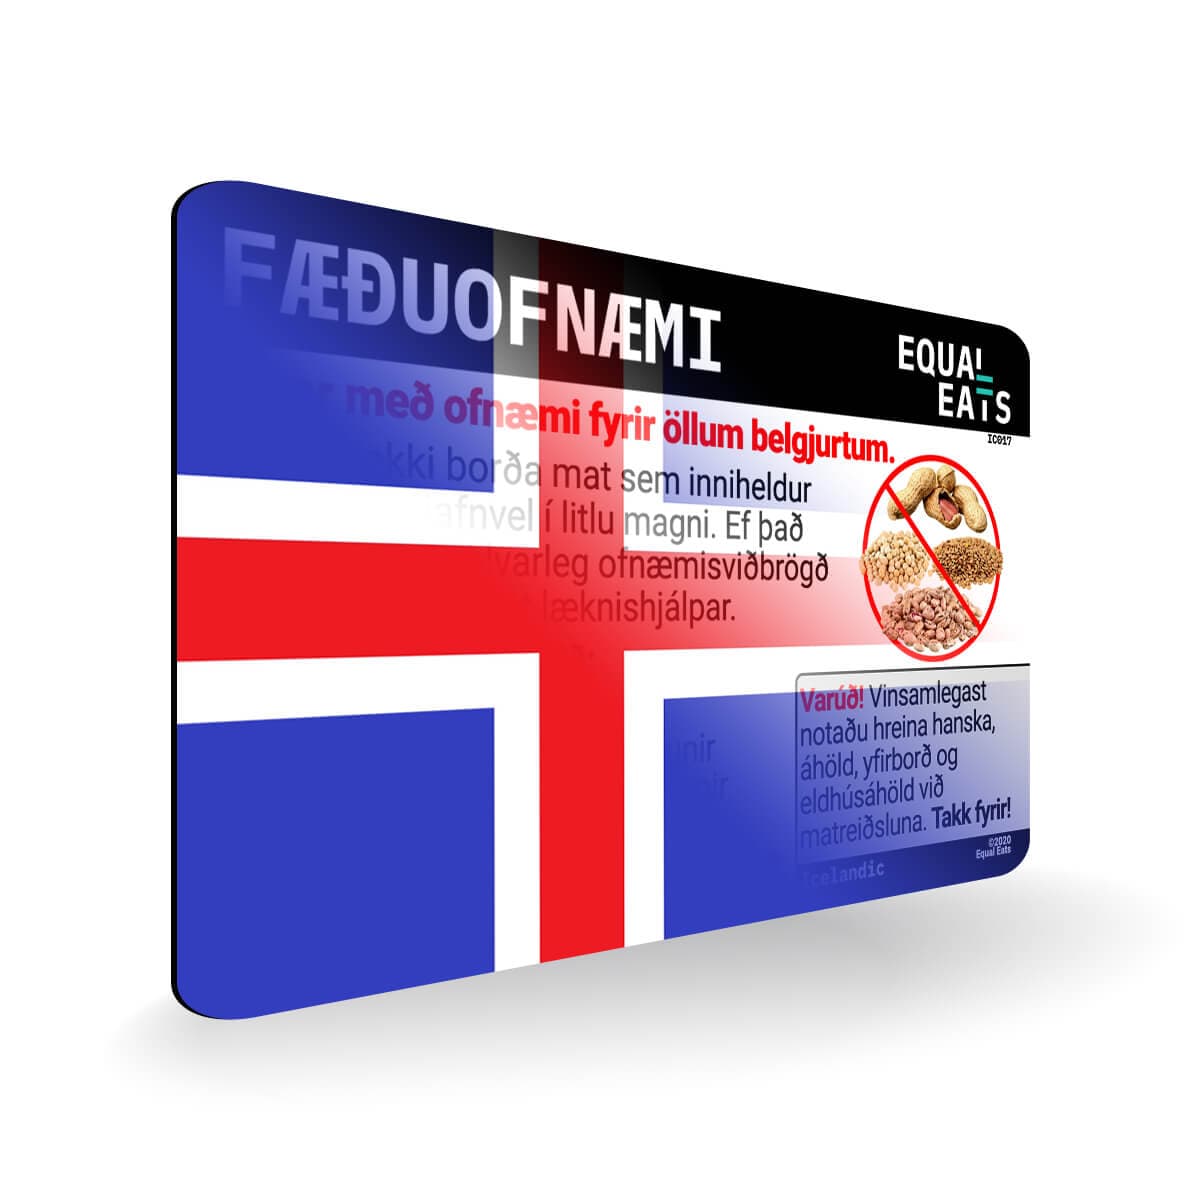 Legume Allergy in Icelandic. Legume Allergy Card for Iceland